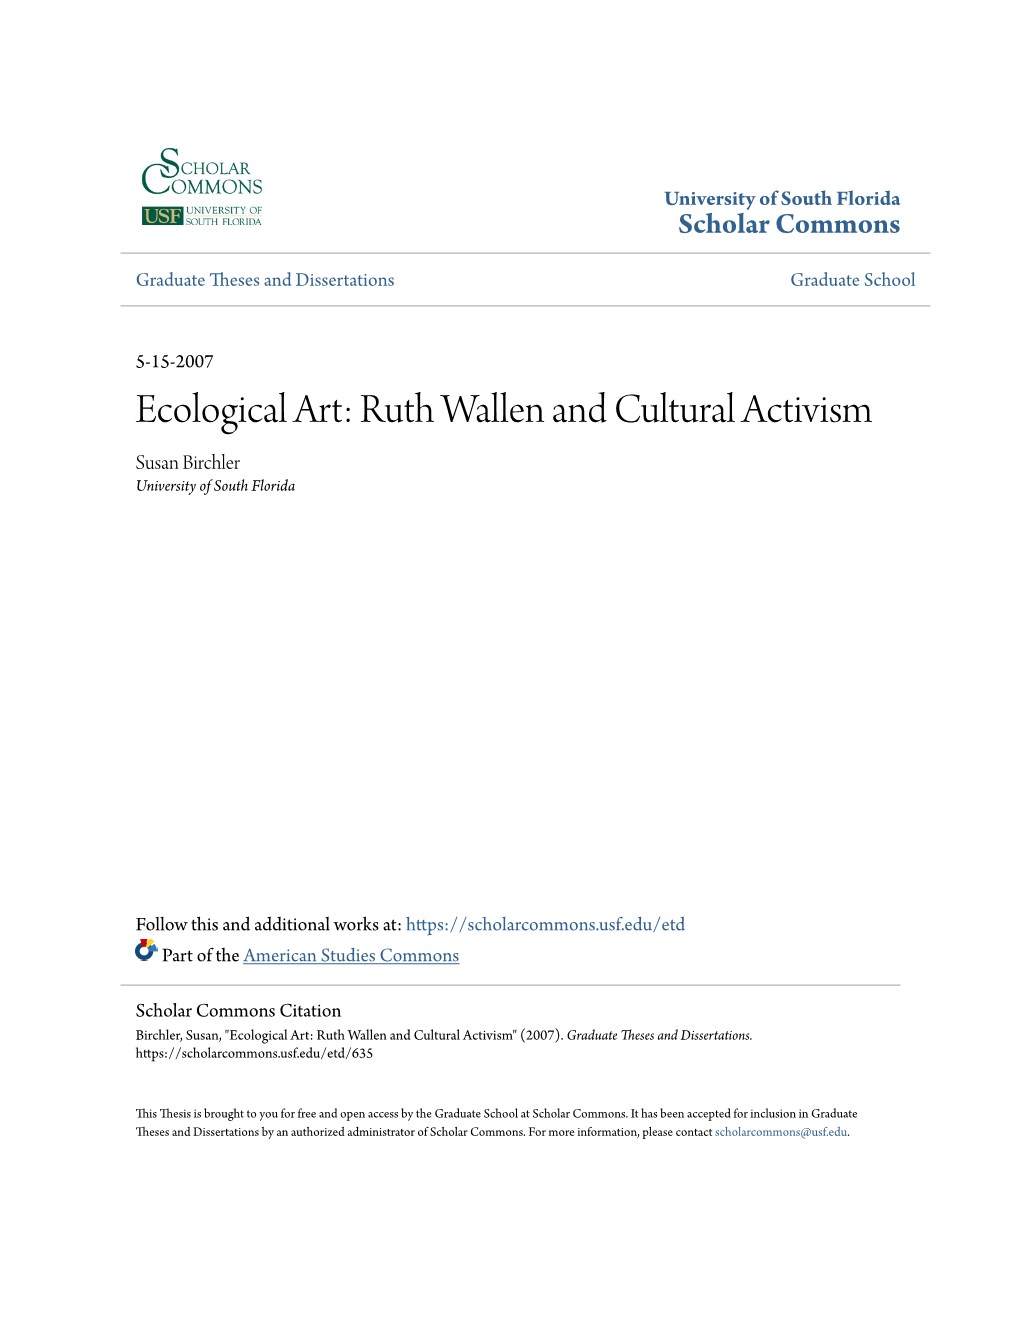 Ecological Art: Ruth Wallen and Cultural Activism Susan Birchler University of South Florida